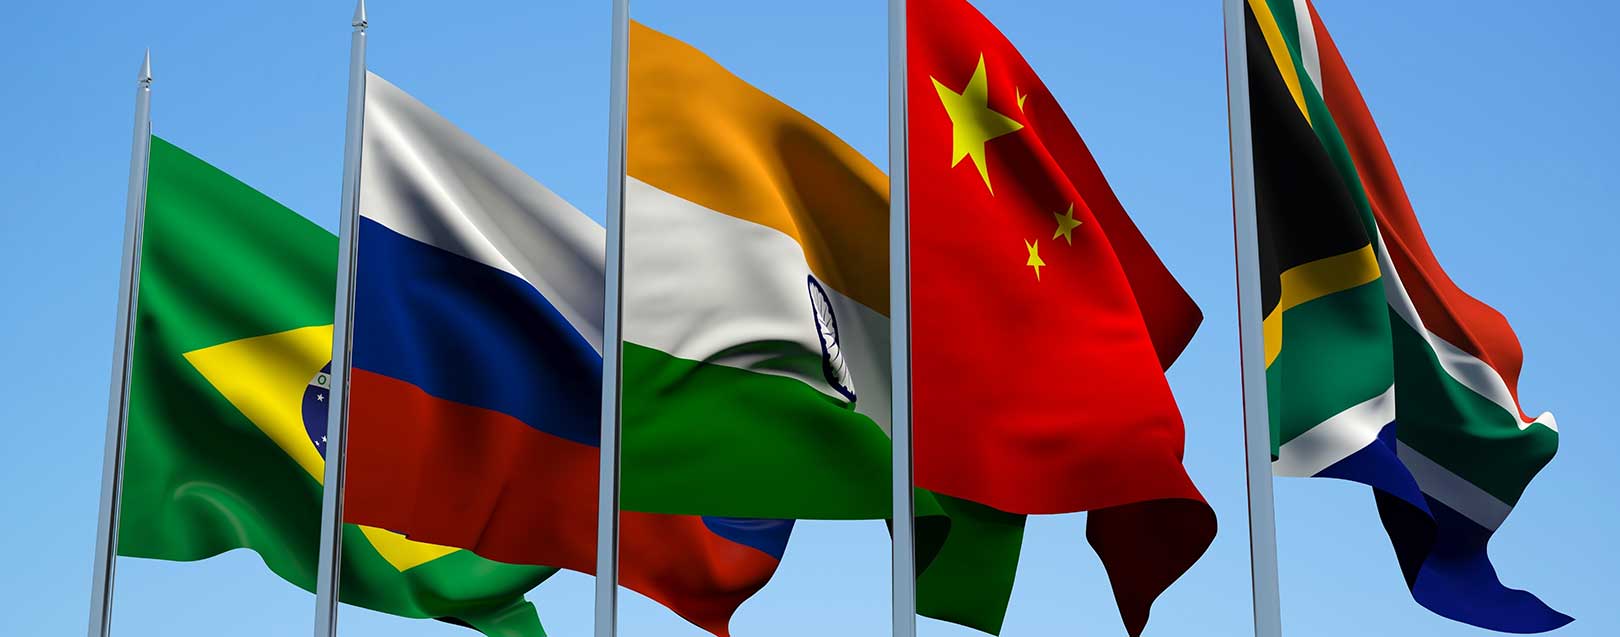 Desipte slowdown, BRICS' potential, strength unchanged: Xi